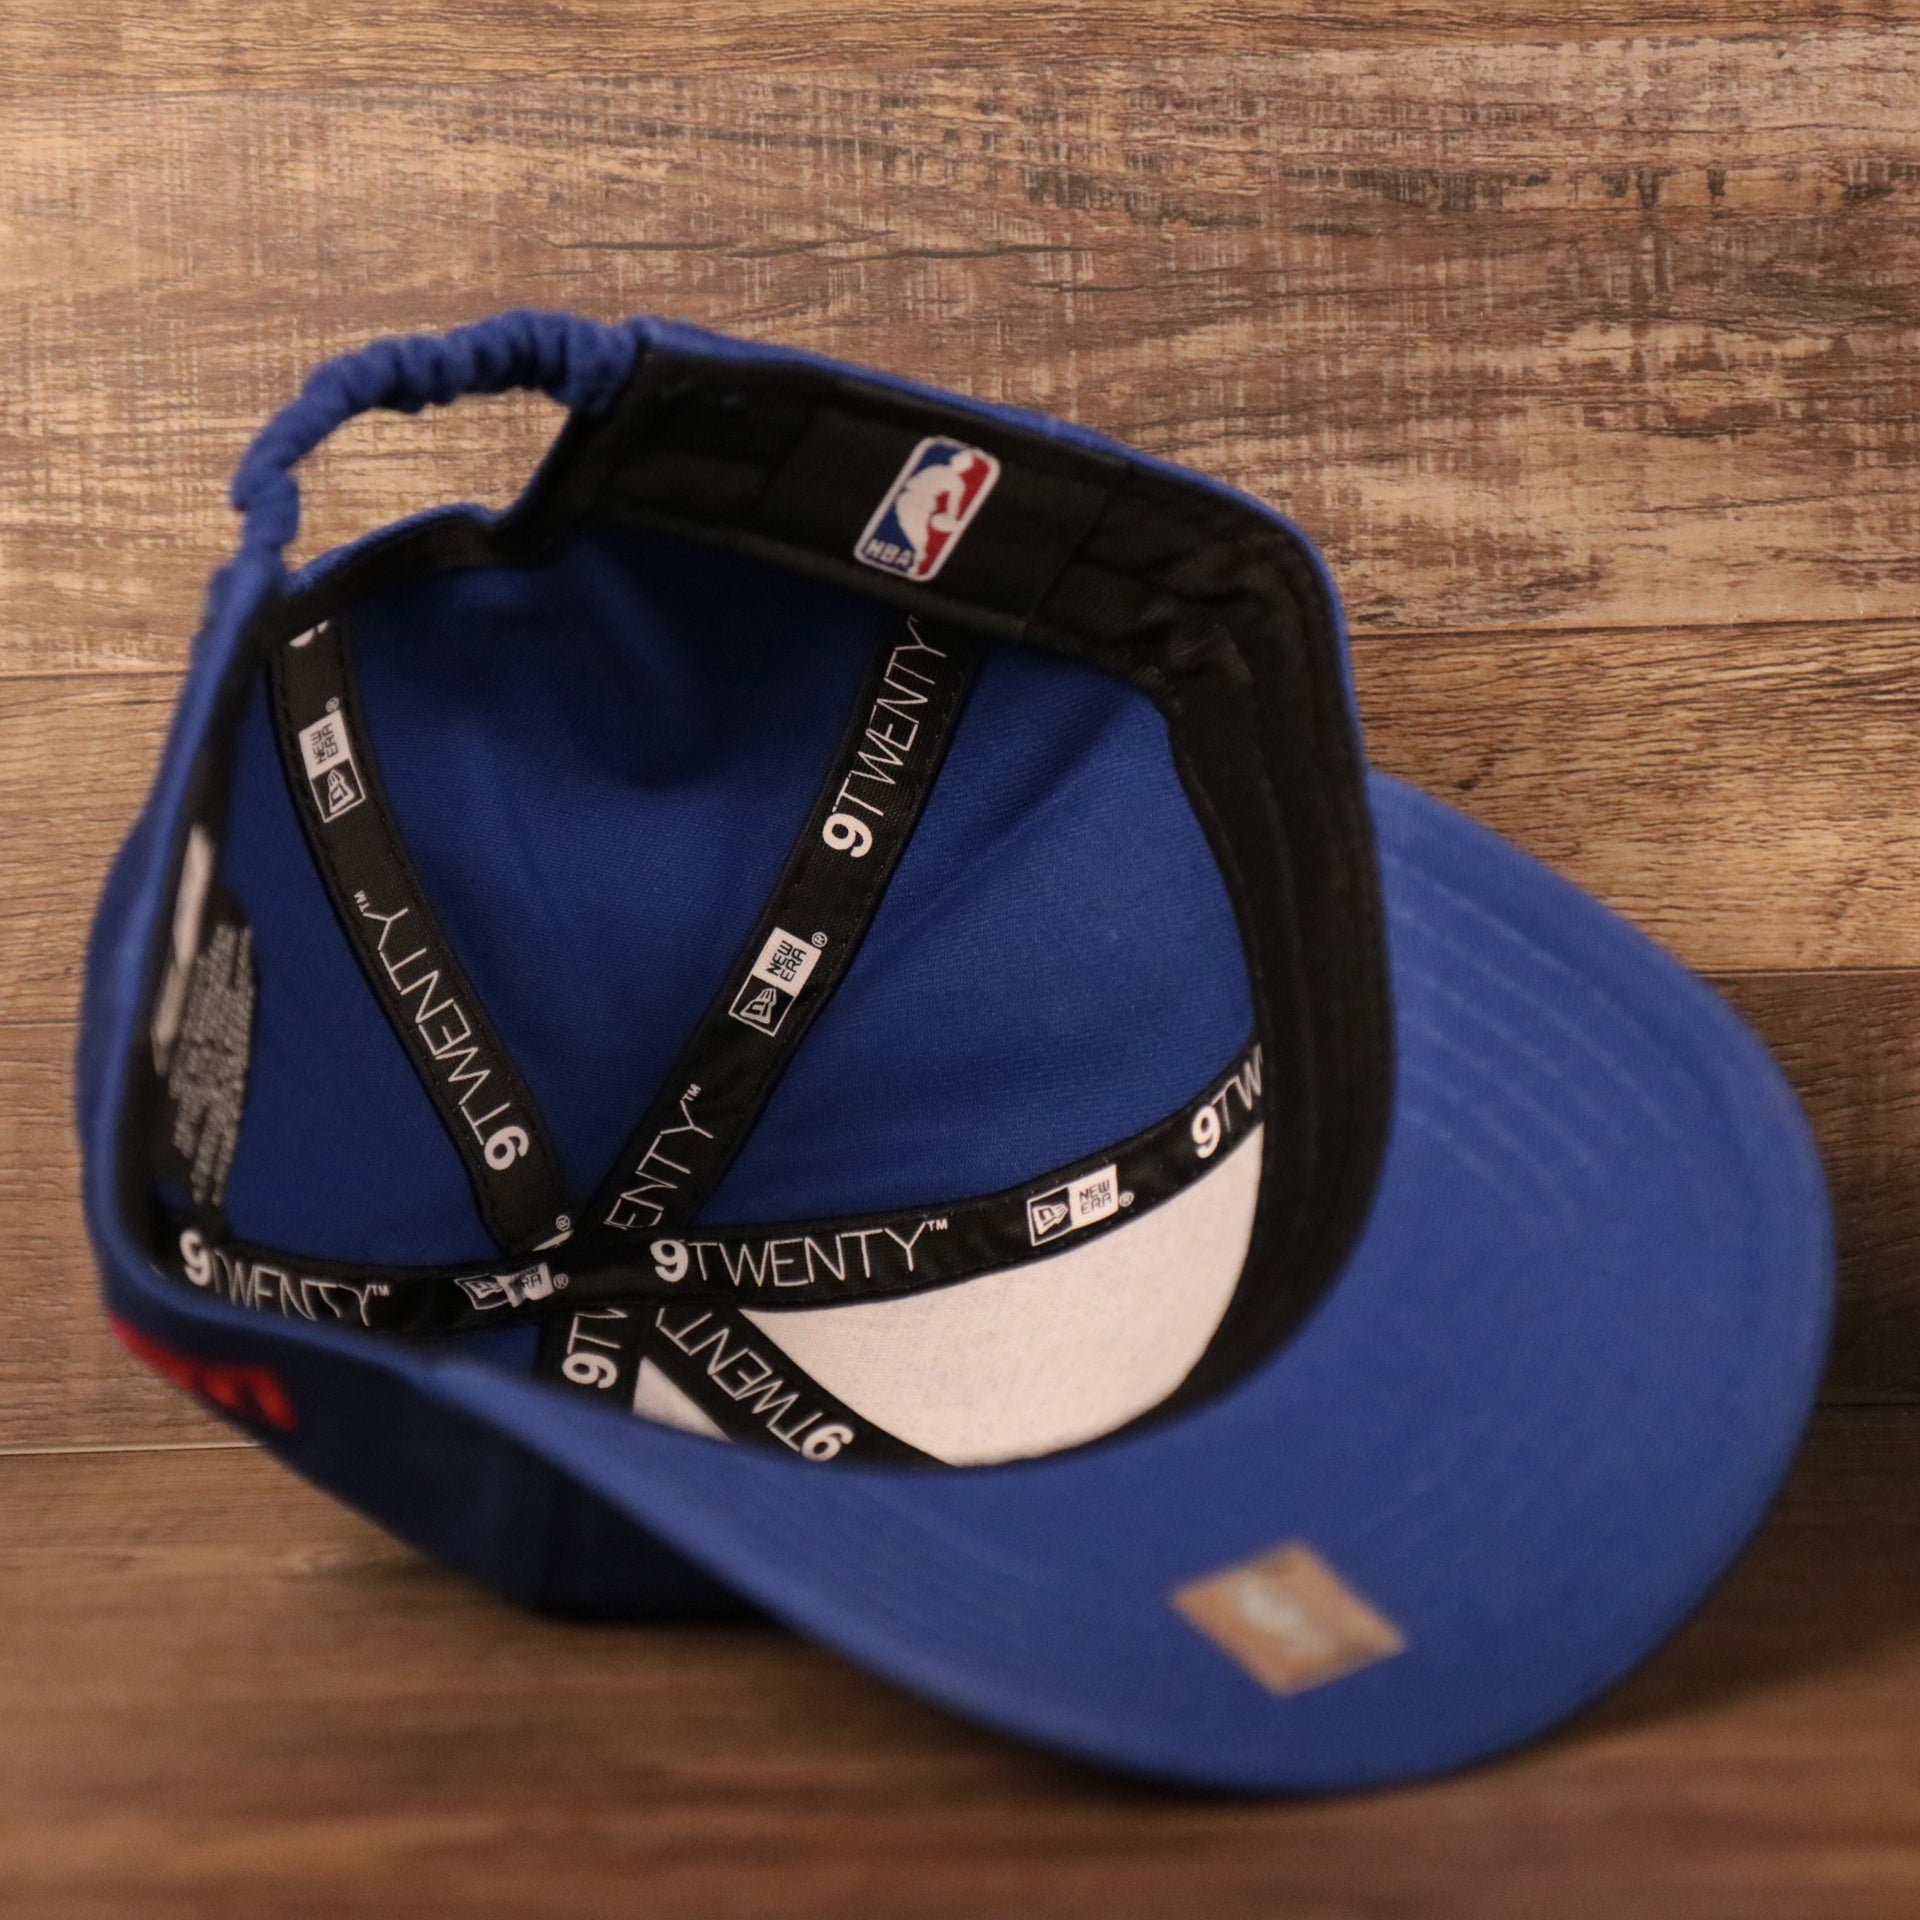 The royal blue Philadelphia 76ers toddler baseball cap by New Era.